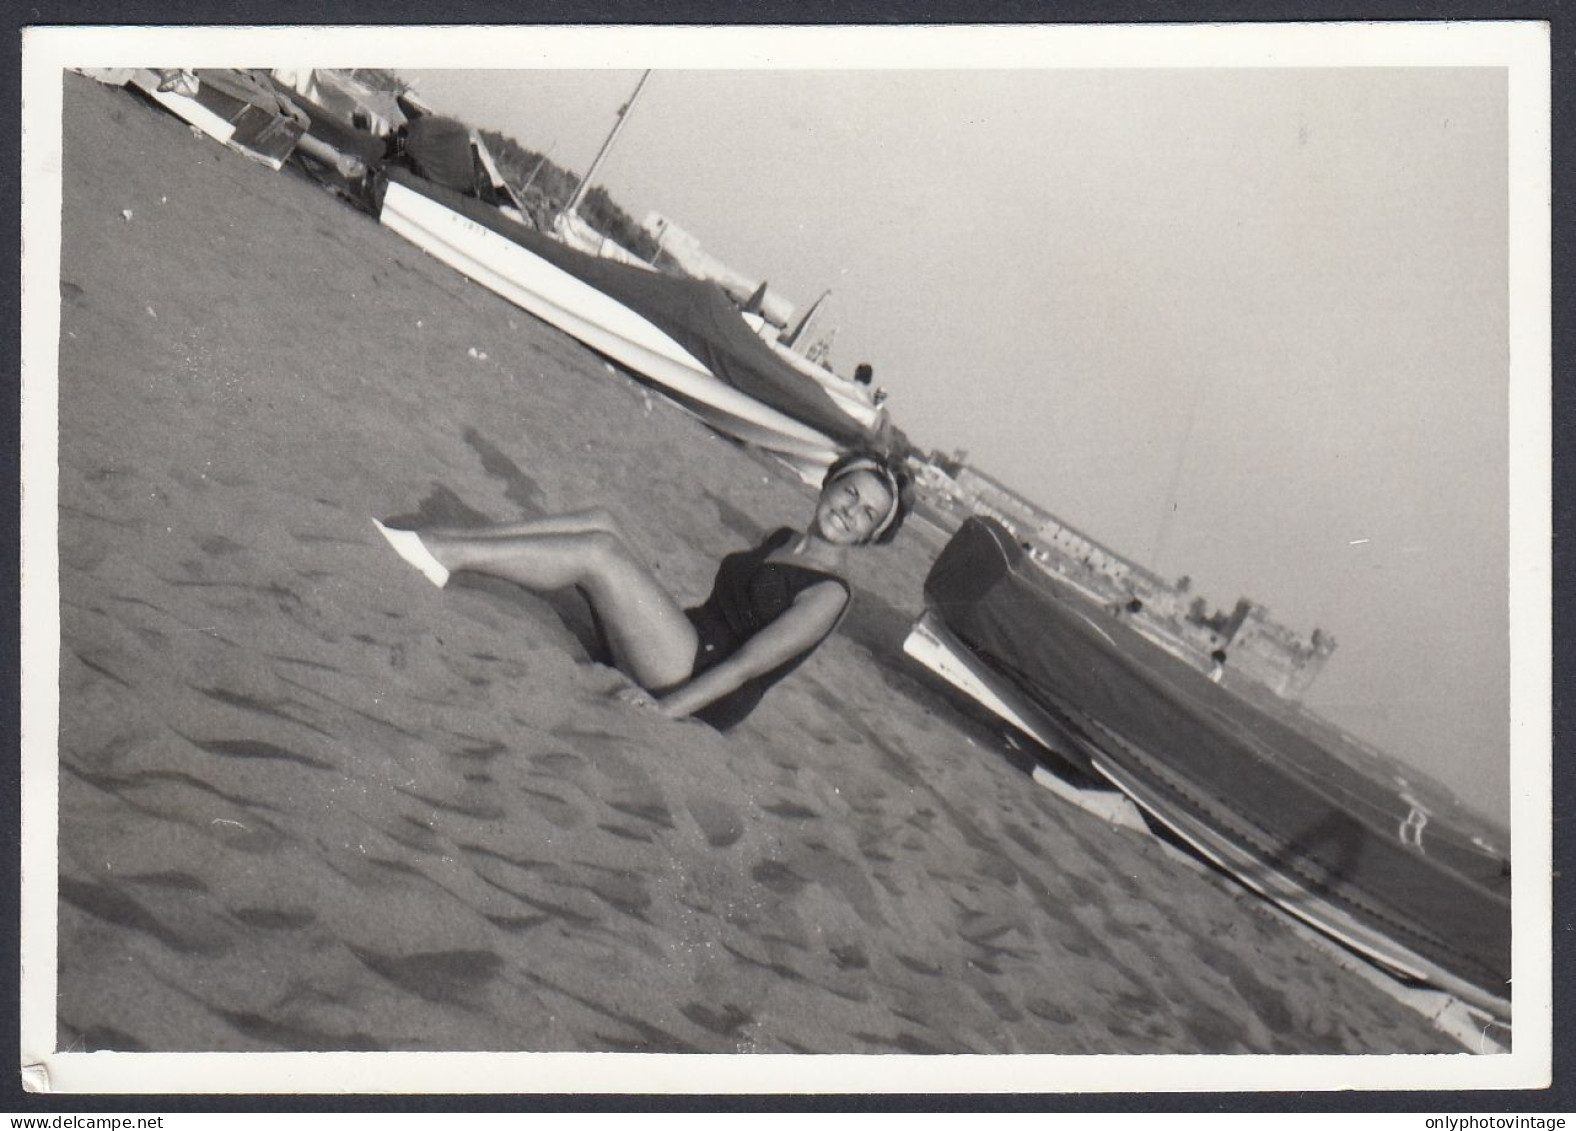 Italia 1960, Vasto (CH), Turista In Spiaggia, Foto Epoca, Vintage Photo - Orte